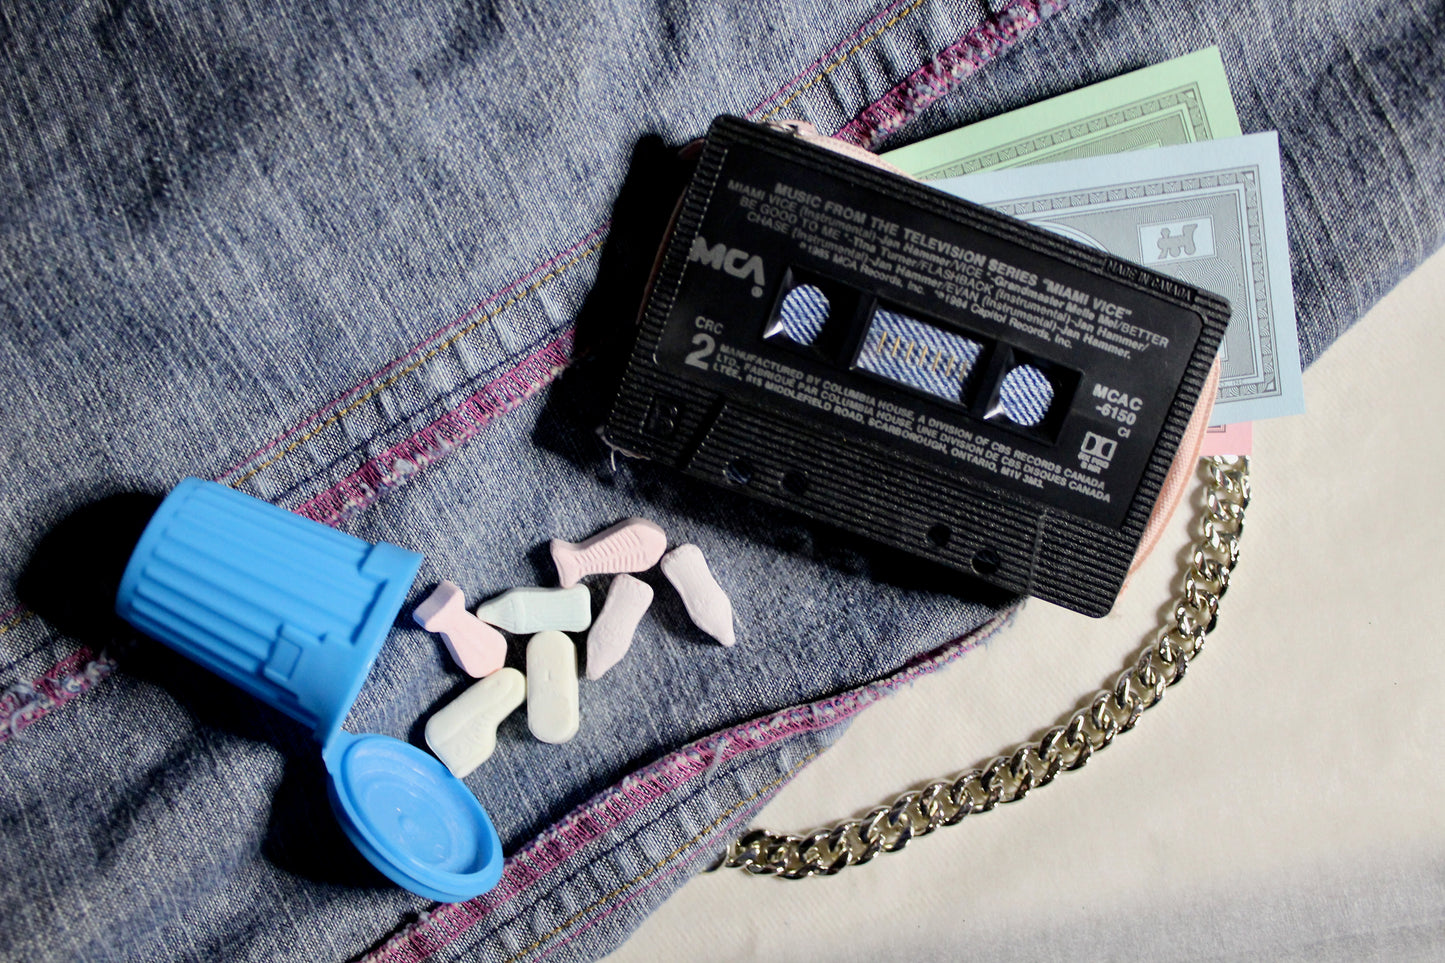 Cassette Wallet - Miami Vice